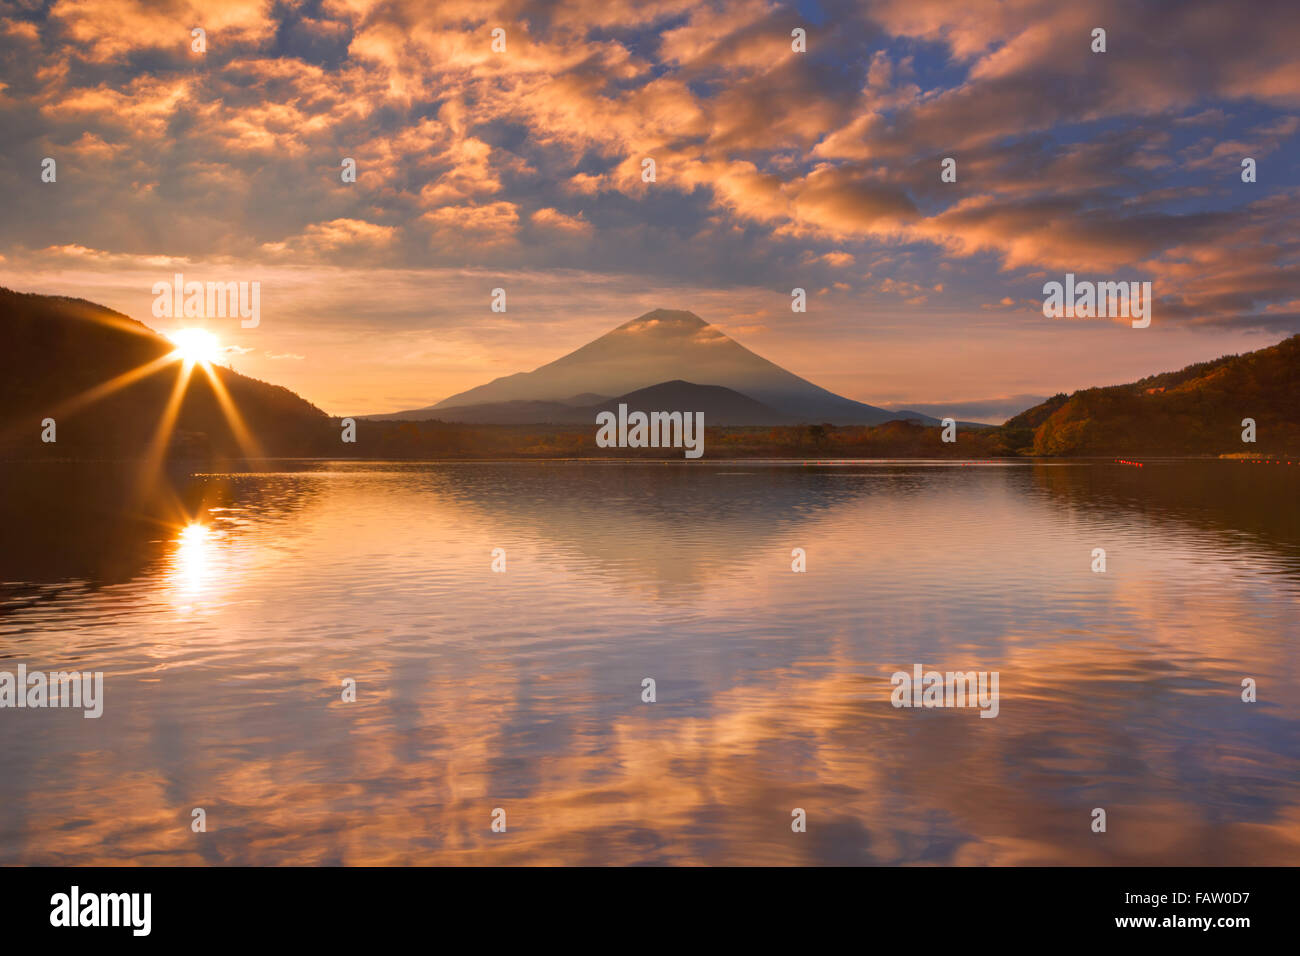 Mount Fuji (Fujisan, 富士山), fotografiert bei Sonnenaufgang vom See Shoji (Shojiko, 精進湖). Stockfoto